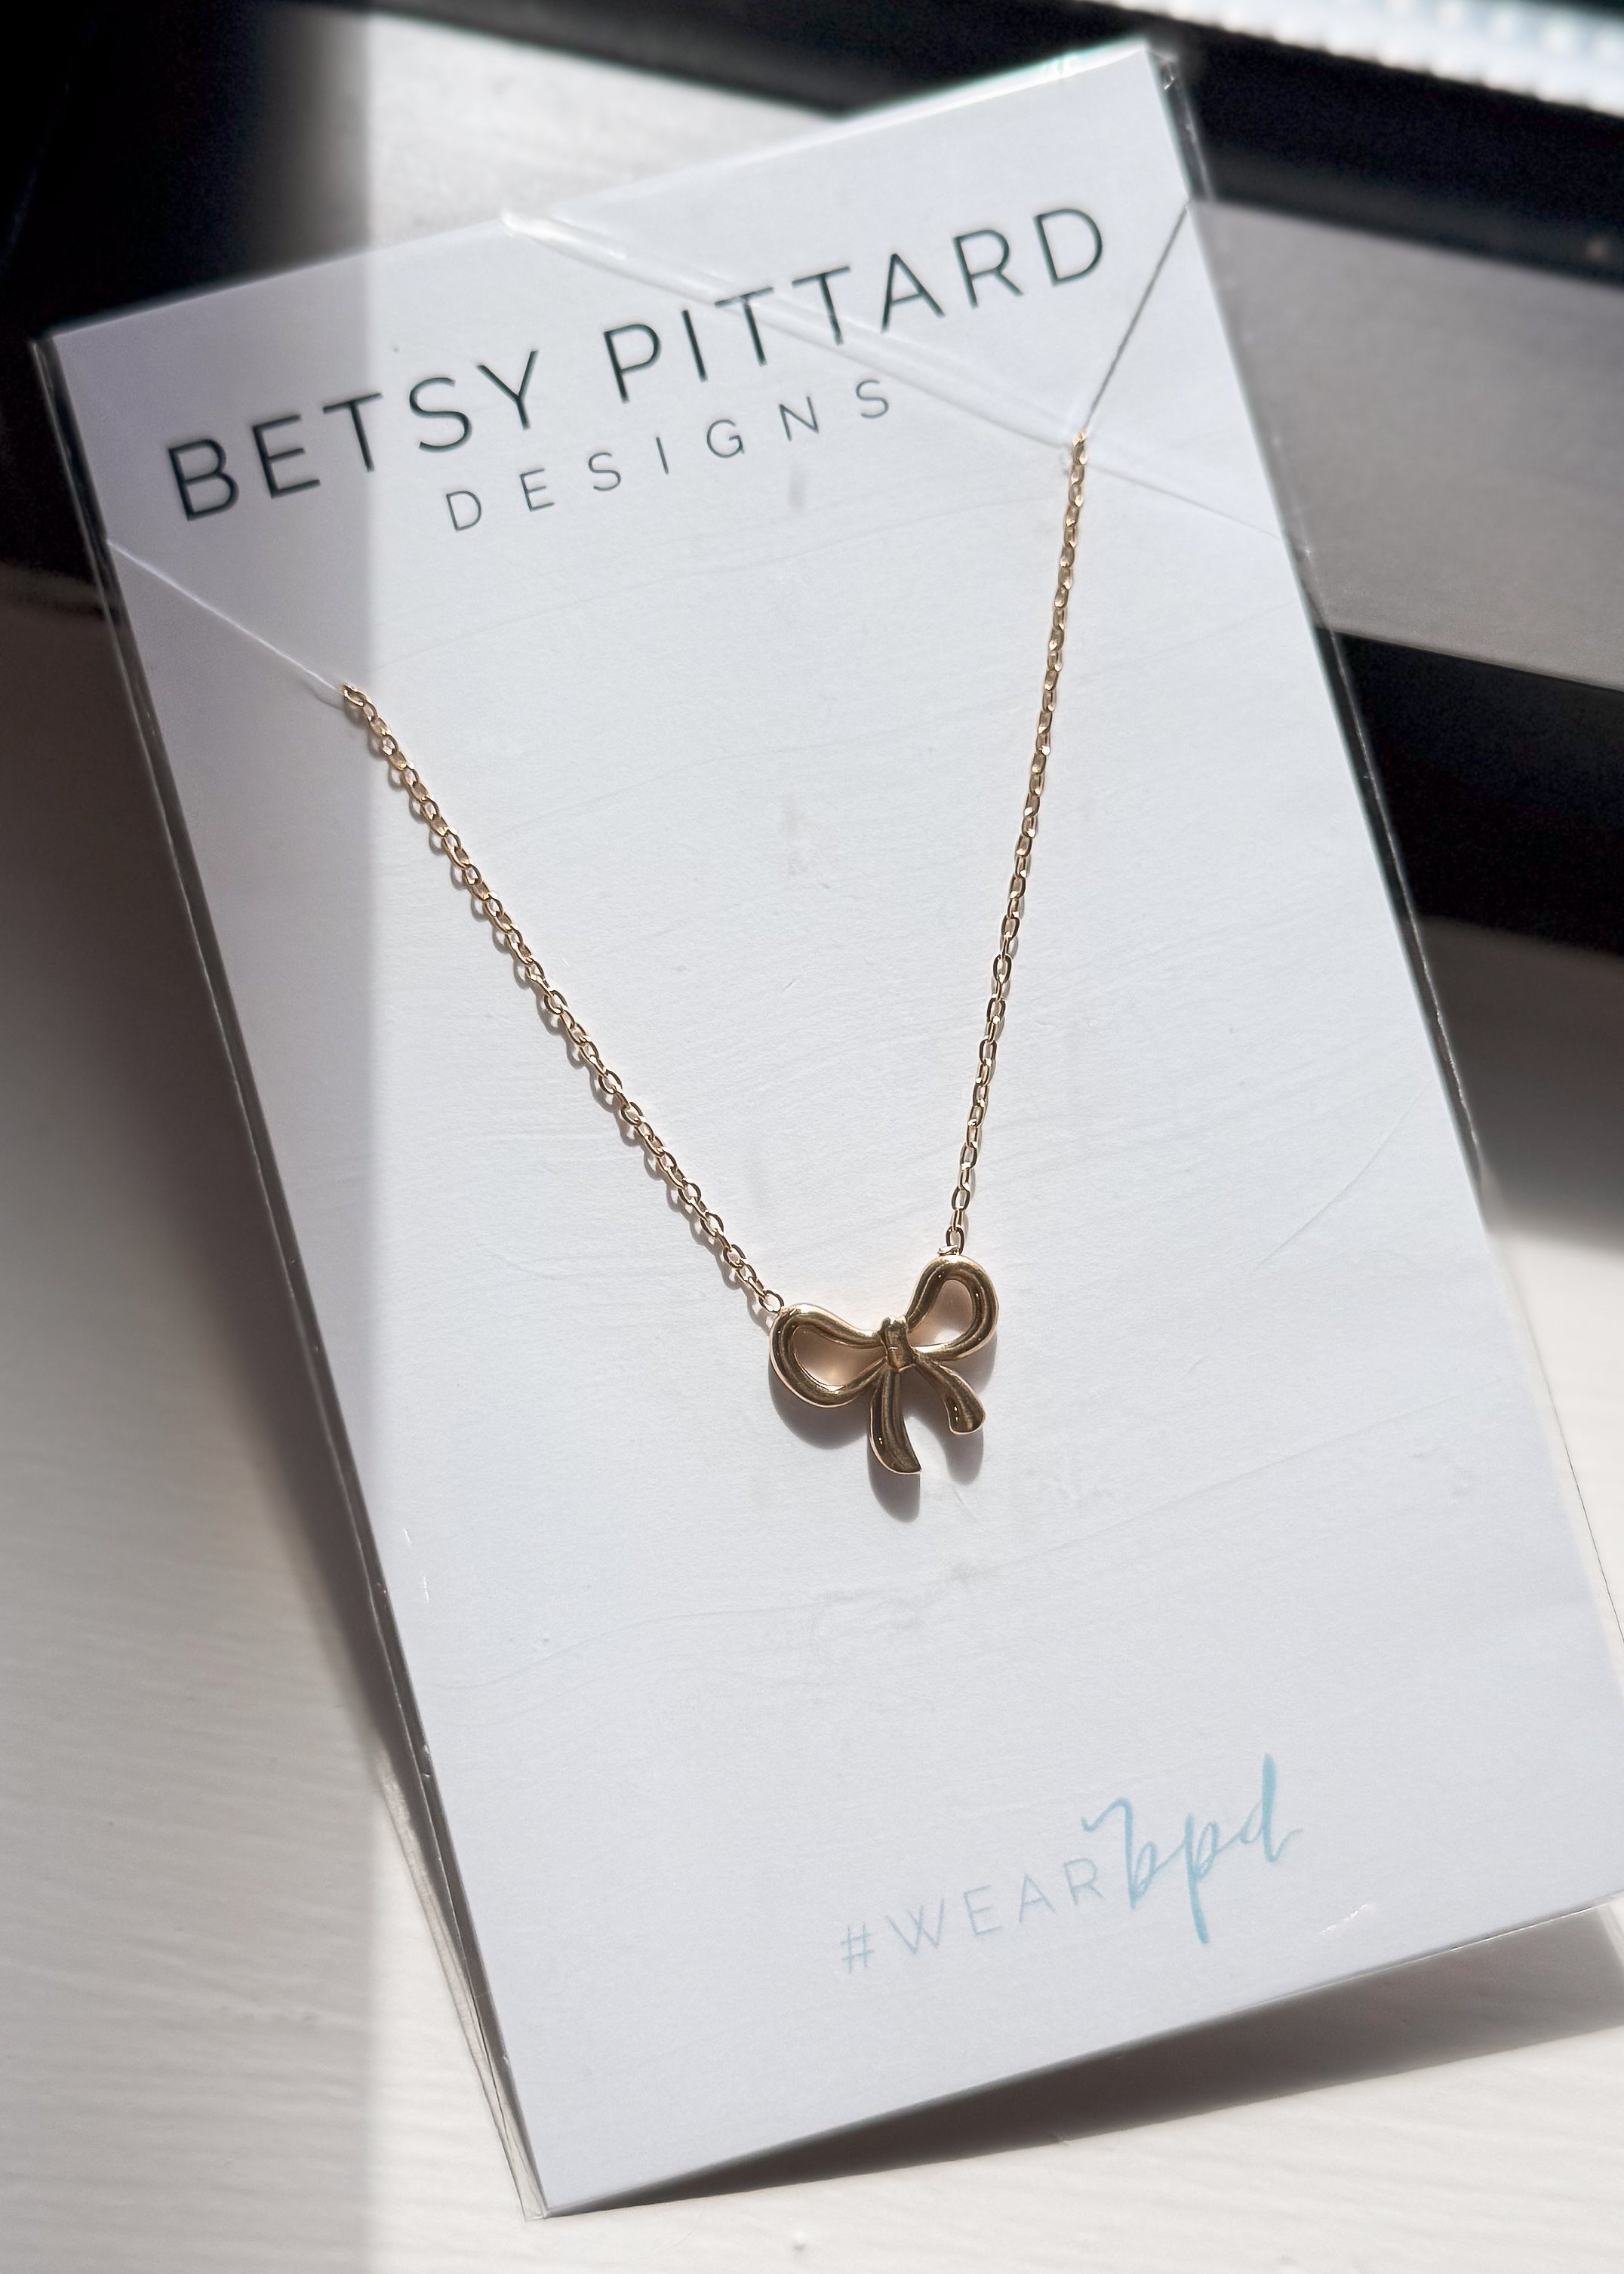 Betsy Pittard Designs: Little Bo Peep